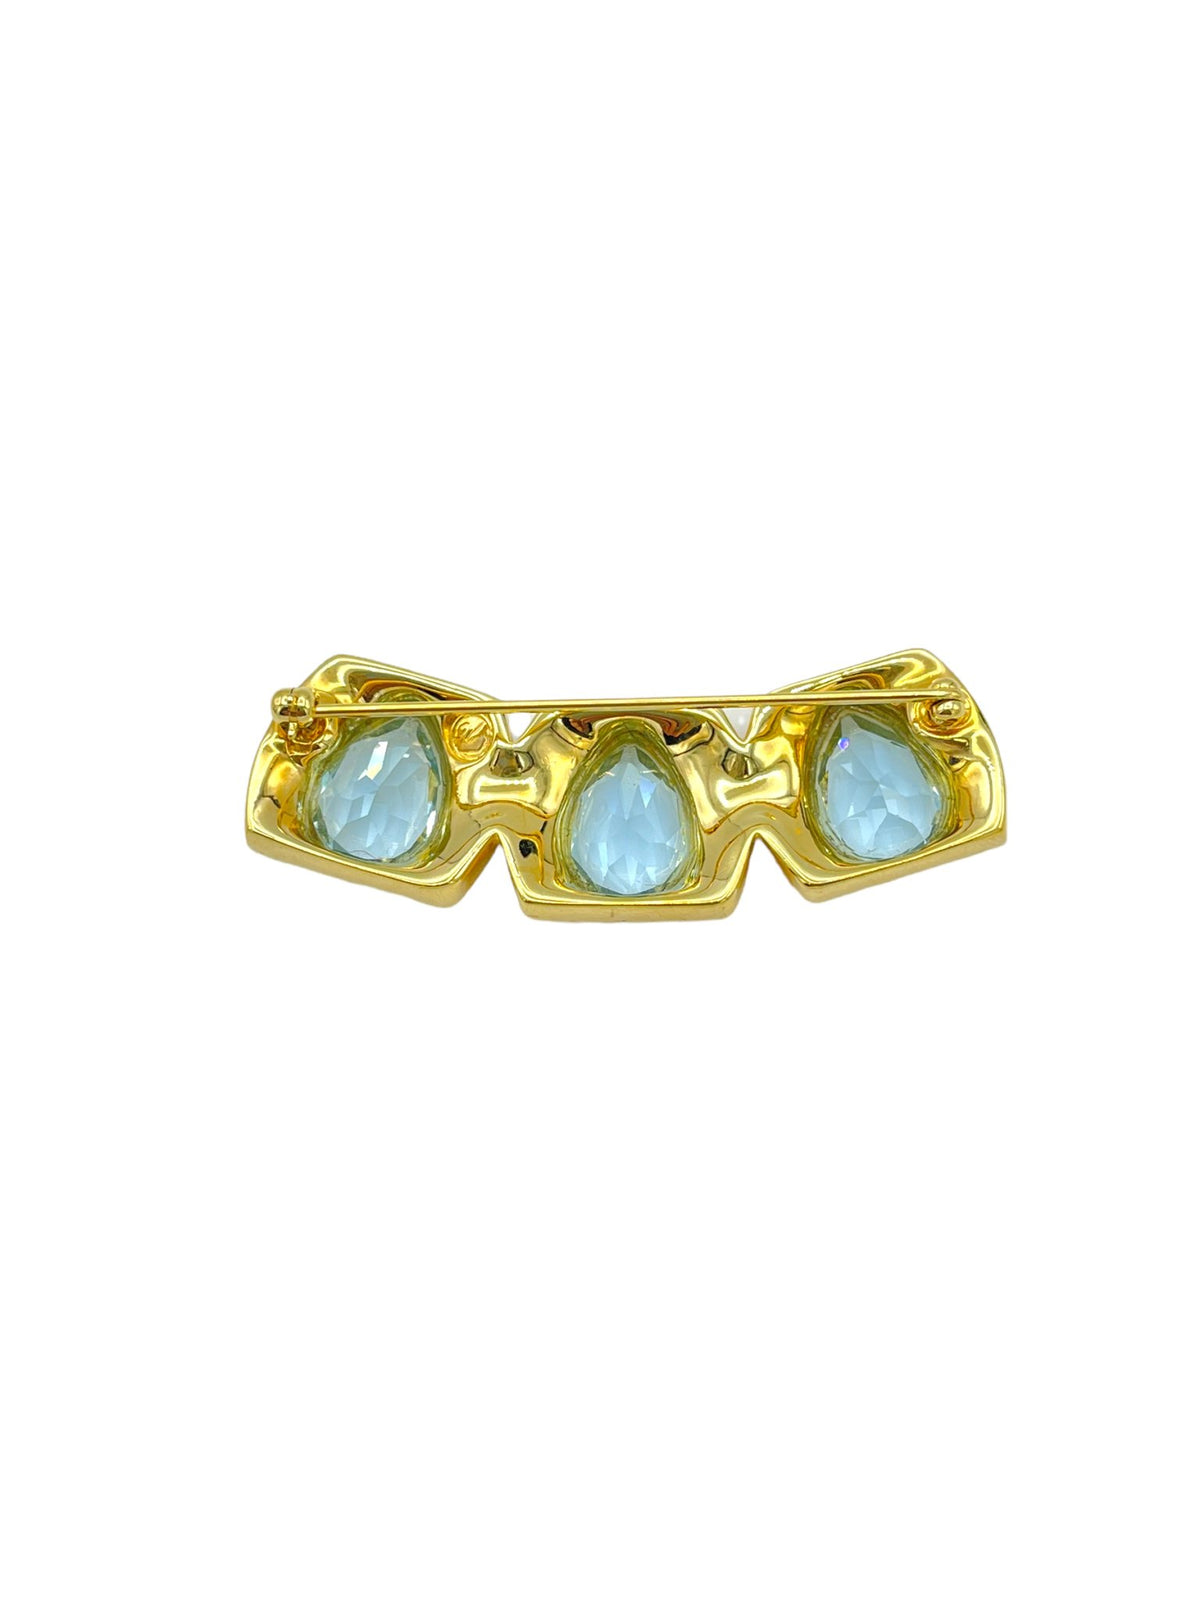 Gold Swarovski Light Topaz Blue Teardrop Brooch - 24 Wishes Vintage Jewelry